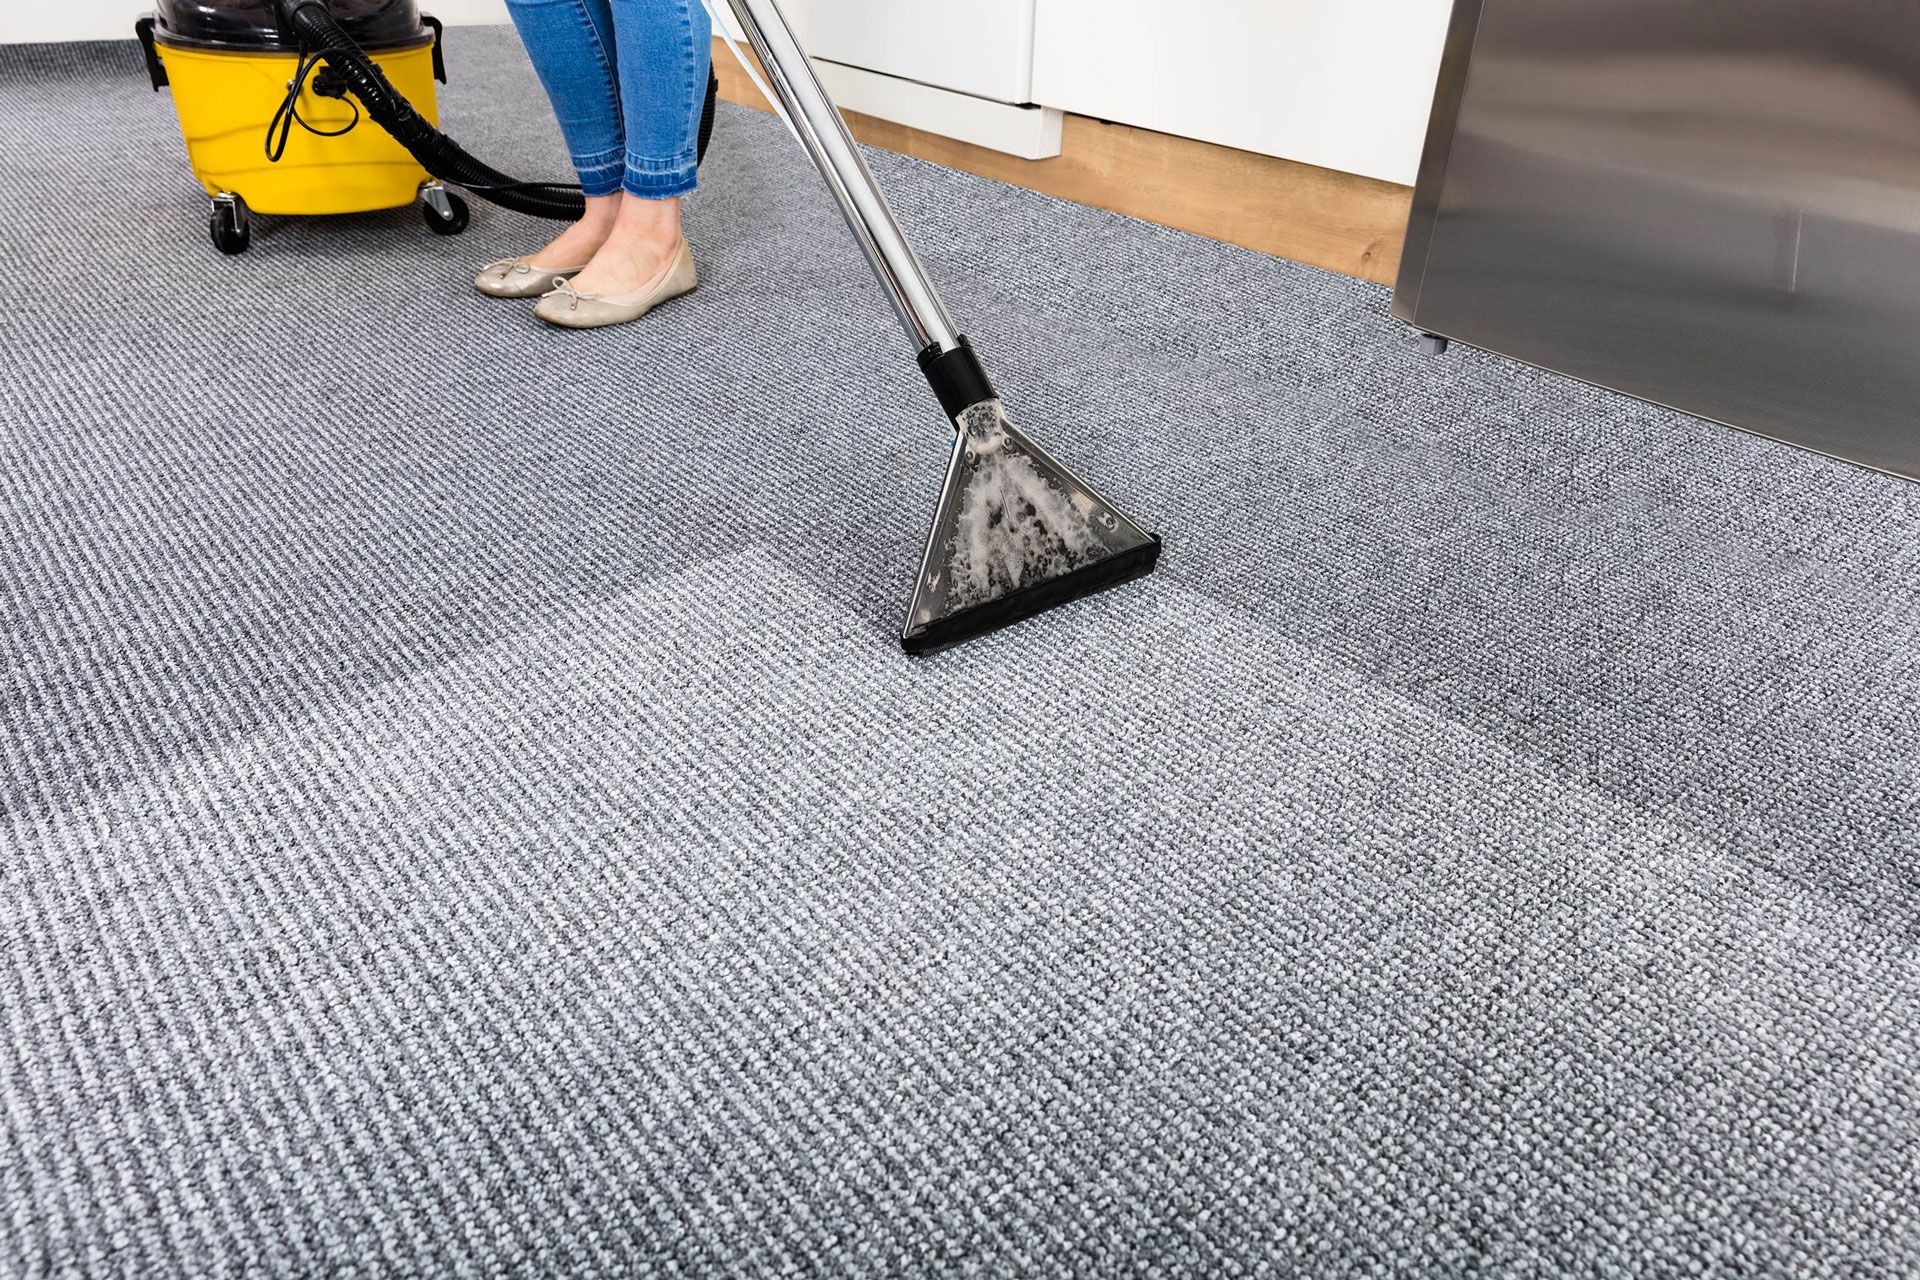 Wet Dry Vacuum Cleaner | Billings, MT | CBM Carpet Cleaning